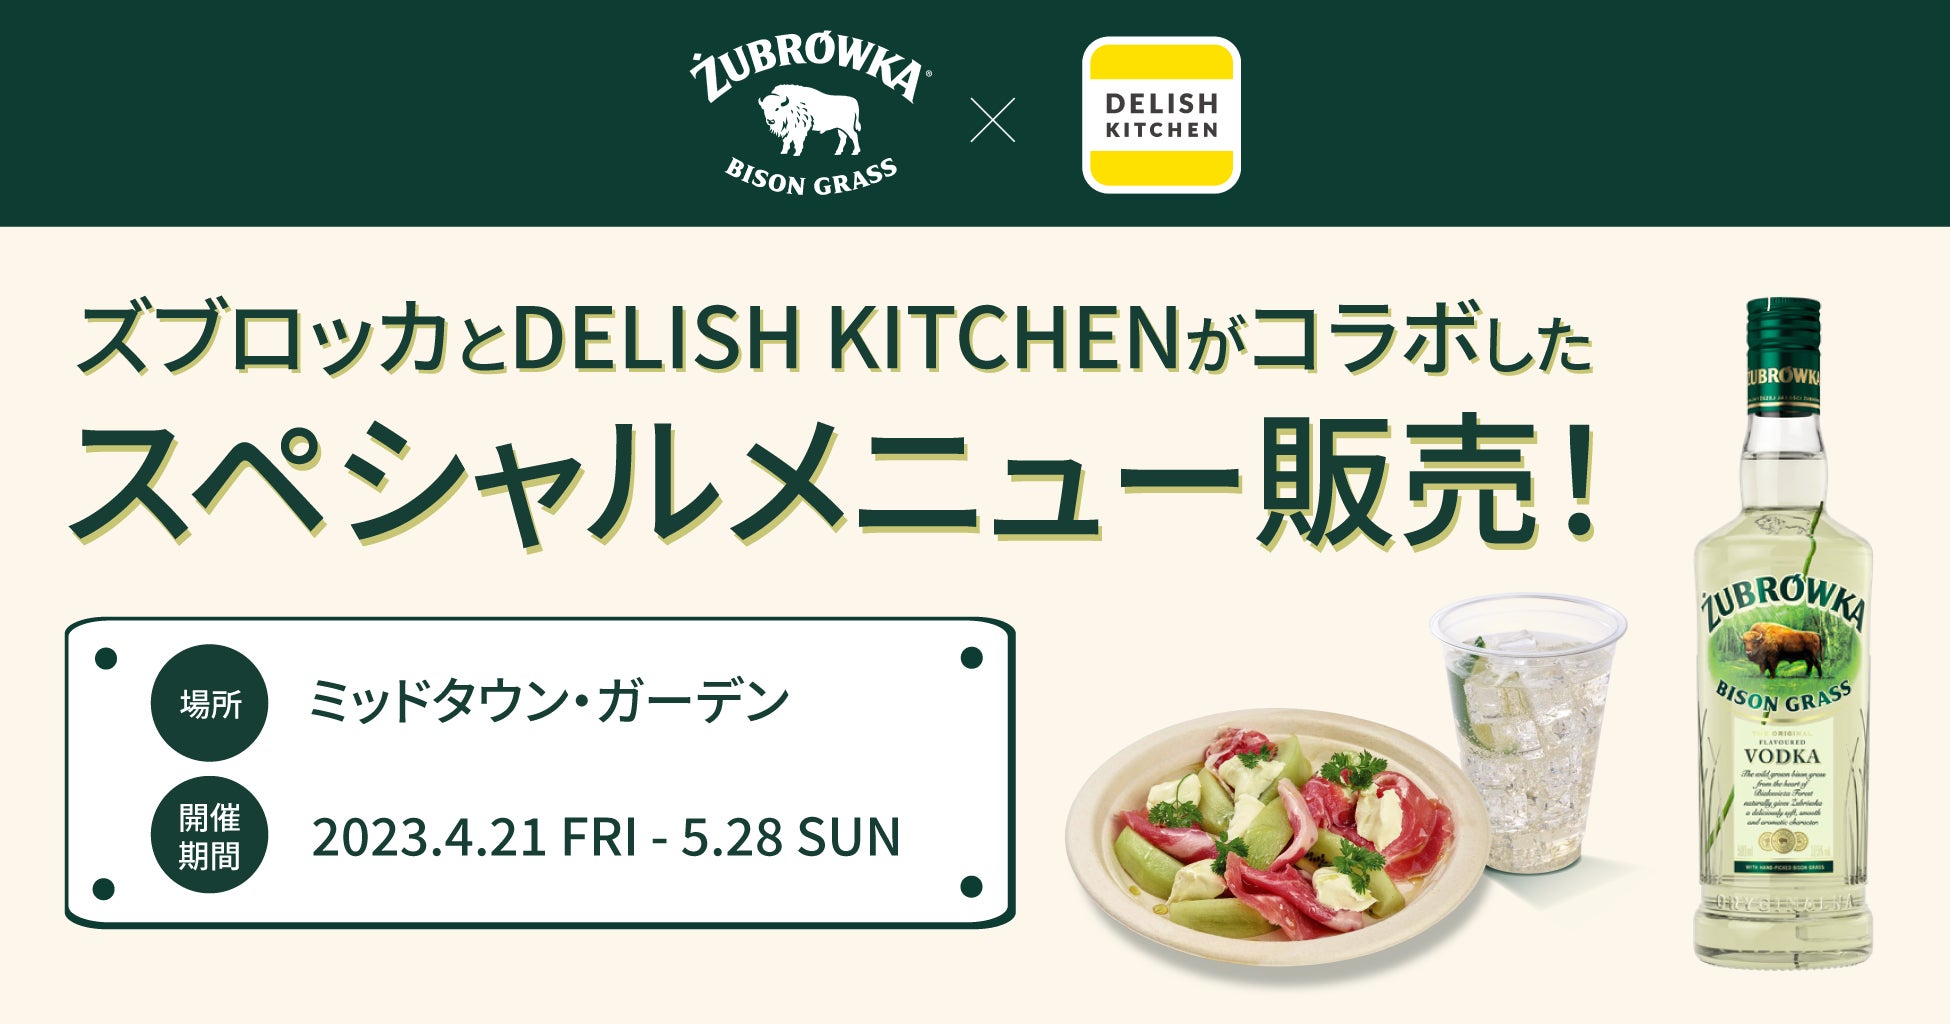 『DELISH KITCHEN』が『ズブロッカ』オリジナルカクテルのペアリングフードをプロデュース！東京ミッドタウン内 MIDPARK CAFÉ STAND にて販売も実施！